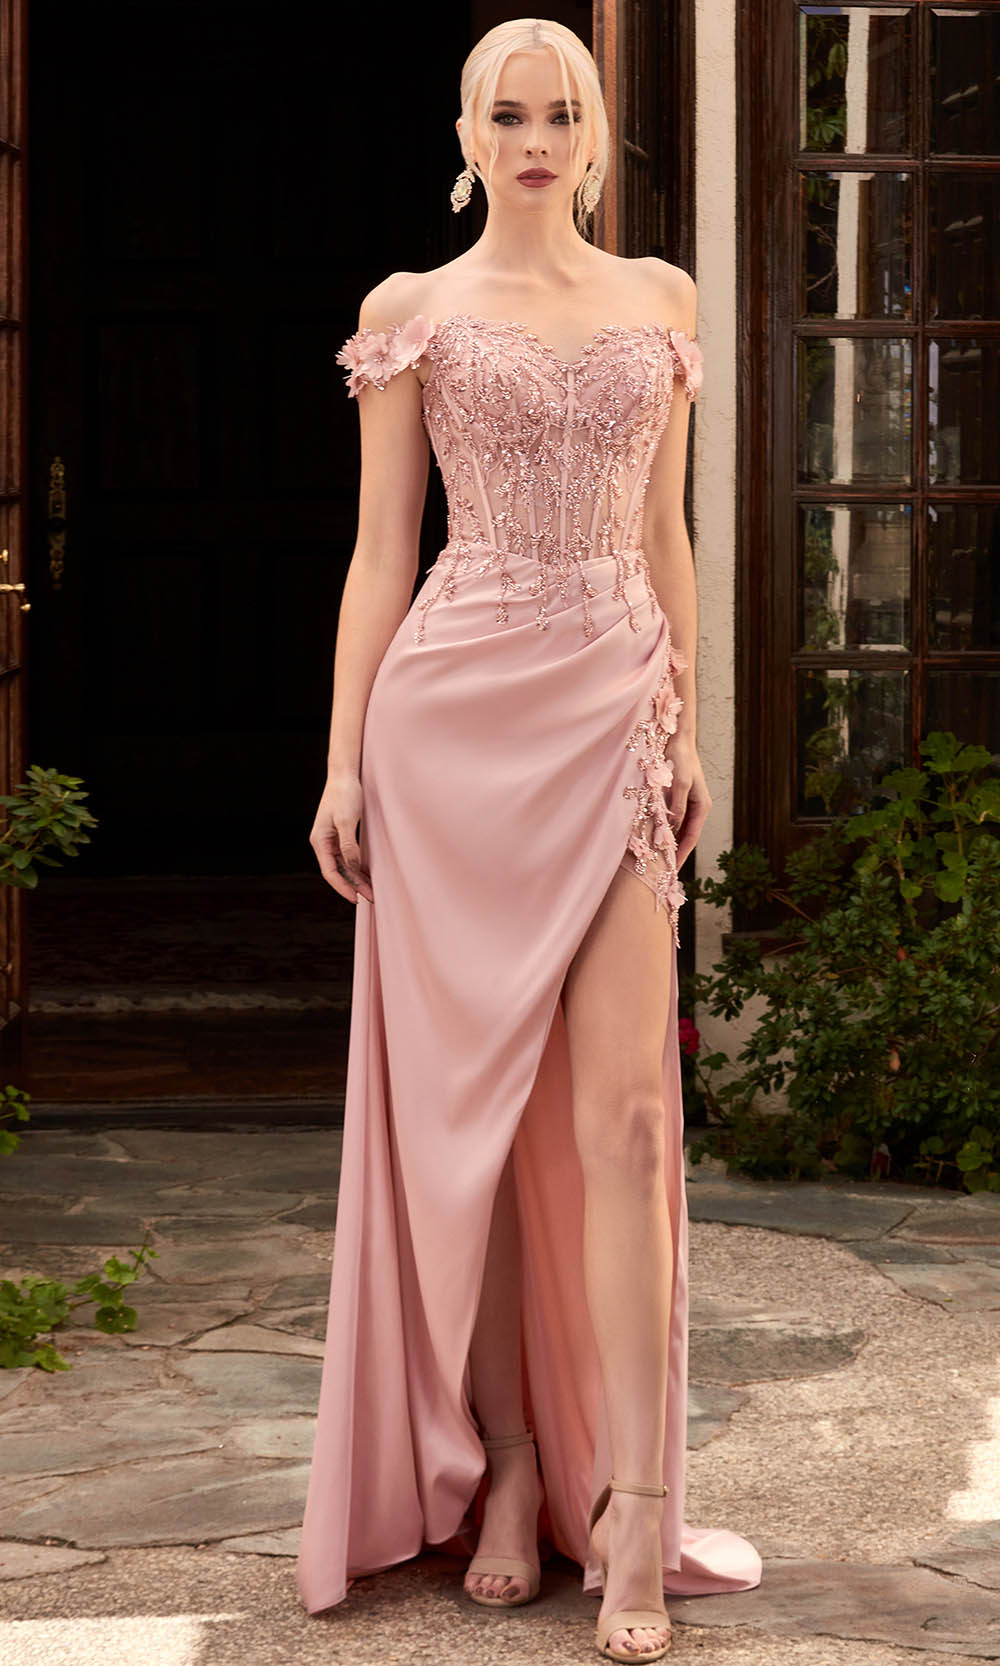 Blush Collection of Stylish Prom Dress, Sexy Prom Dresses